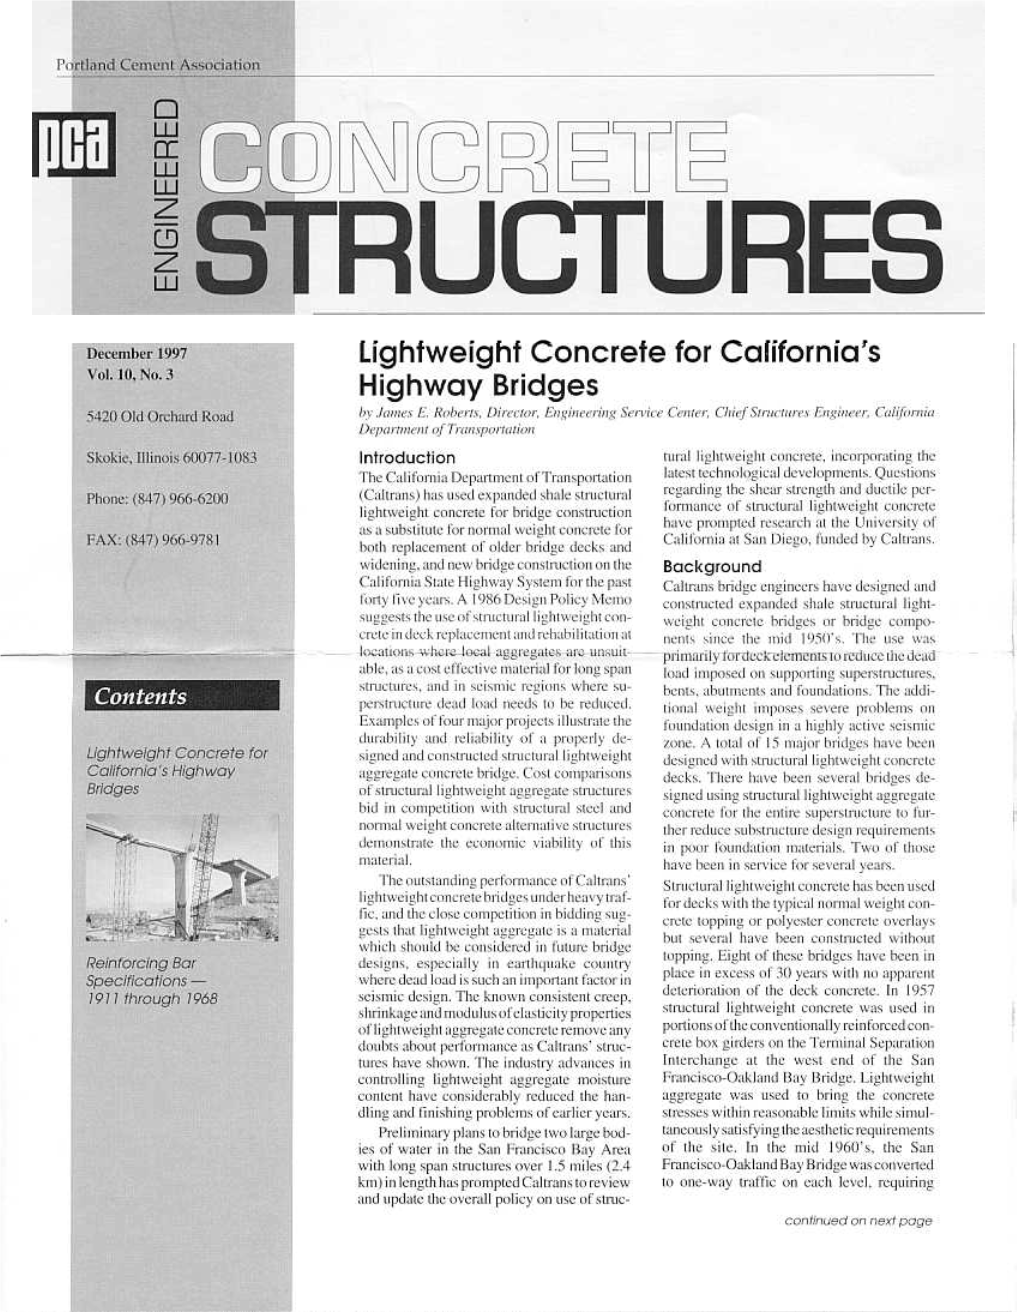 Lightweight Concrete for California's Highway Bridges by James E